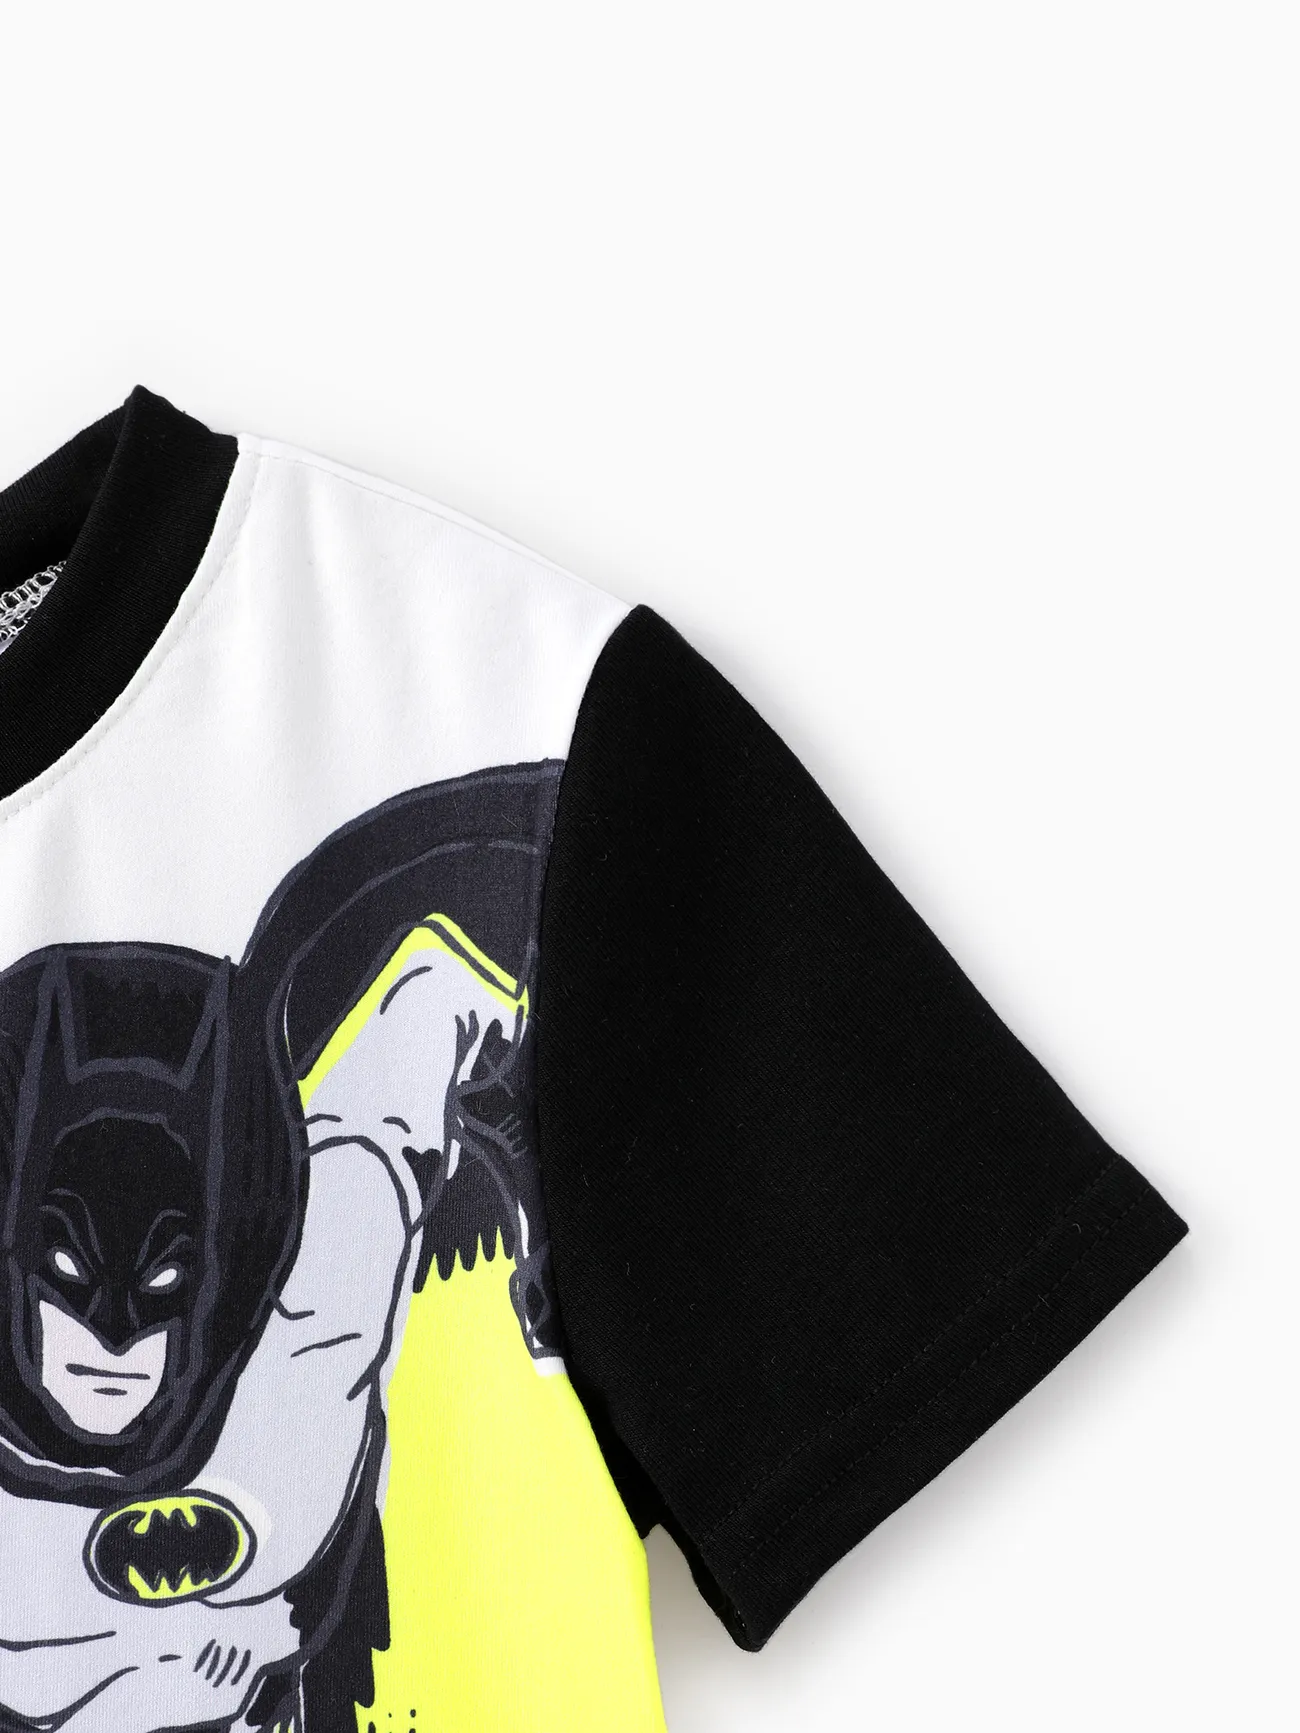 Justice League Toddler Boys 2pcs Batman Character Color-block Print T-shirt with Shorts Set  Black big image 1